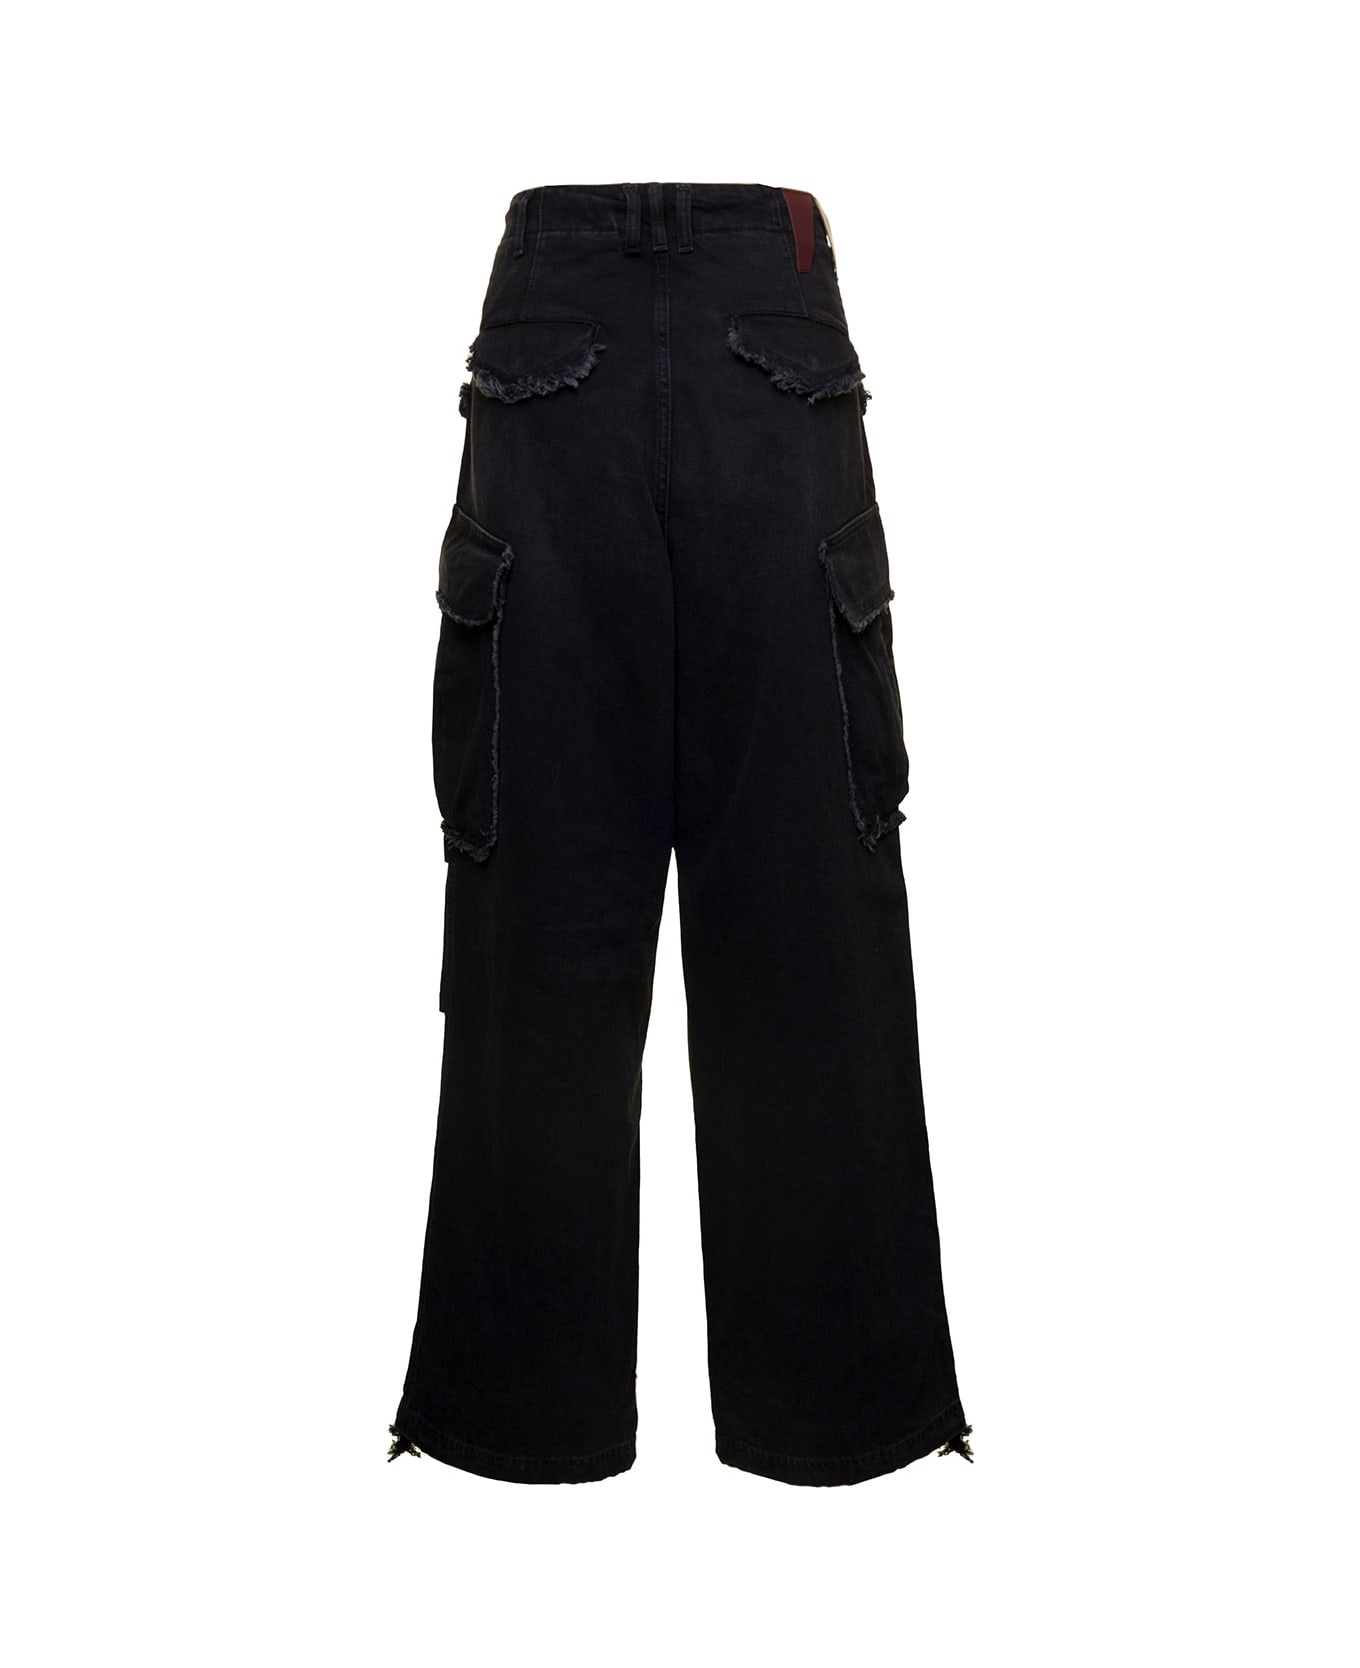 DARKPARK 'vivi' Black Oversized Cargo Jeans With Patch Pockets In Cotton Denim Woman - Black ボトムス